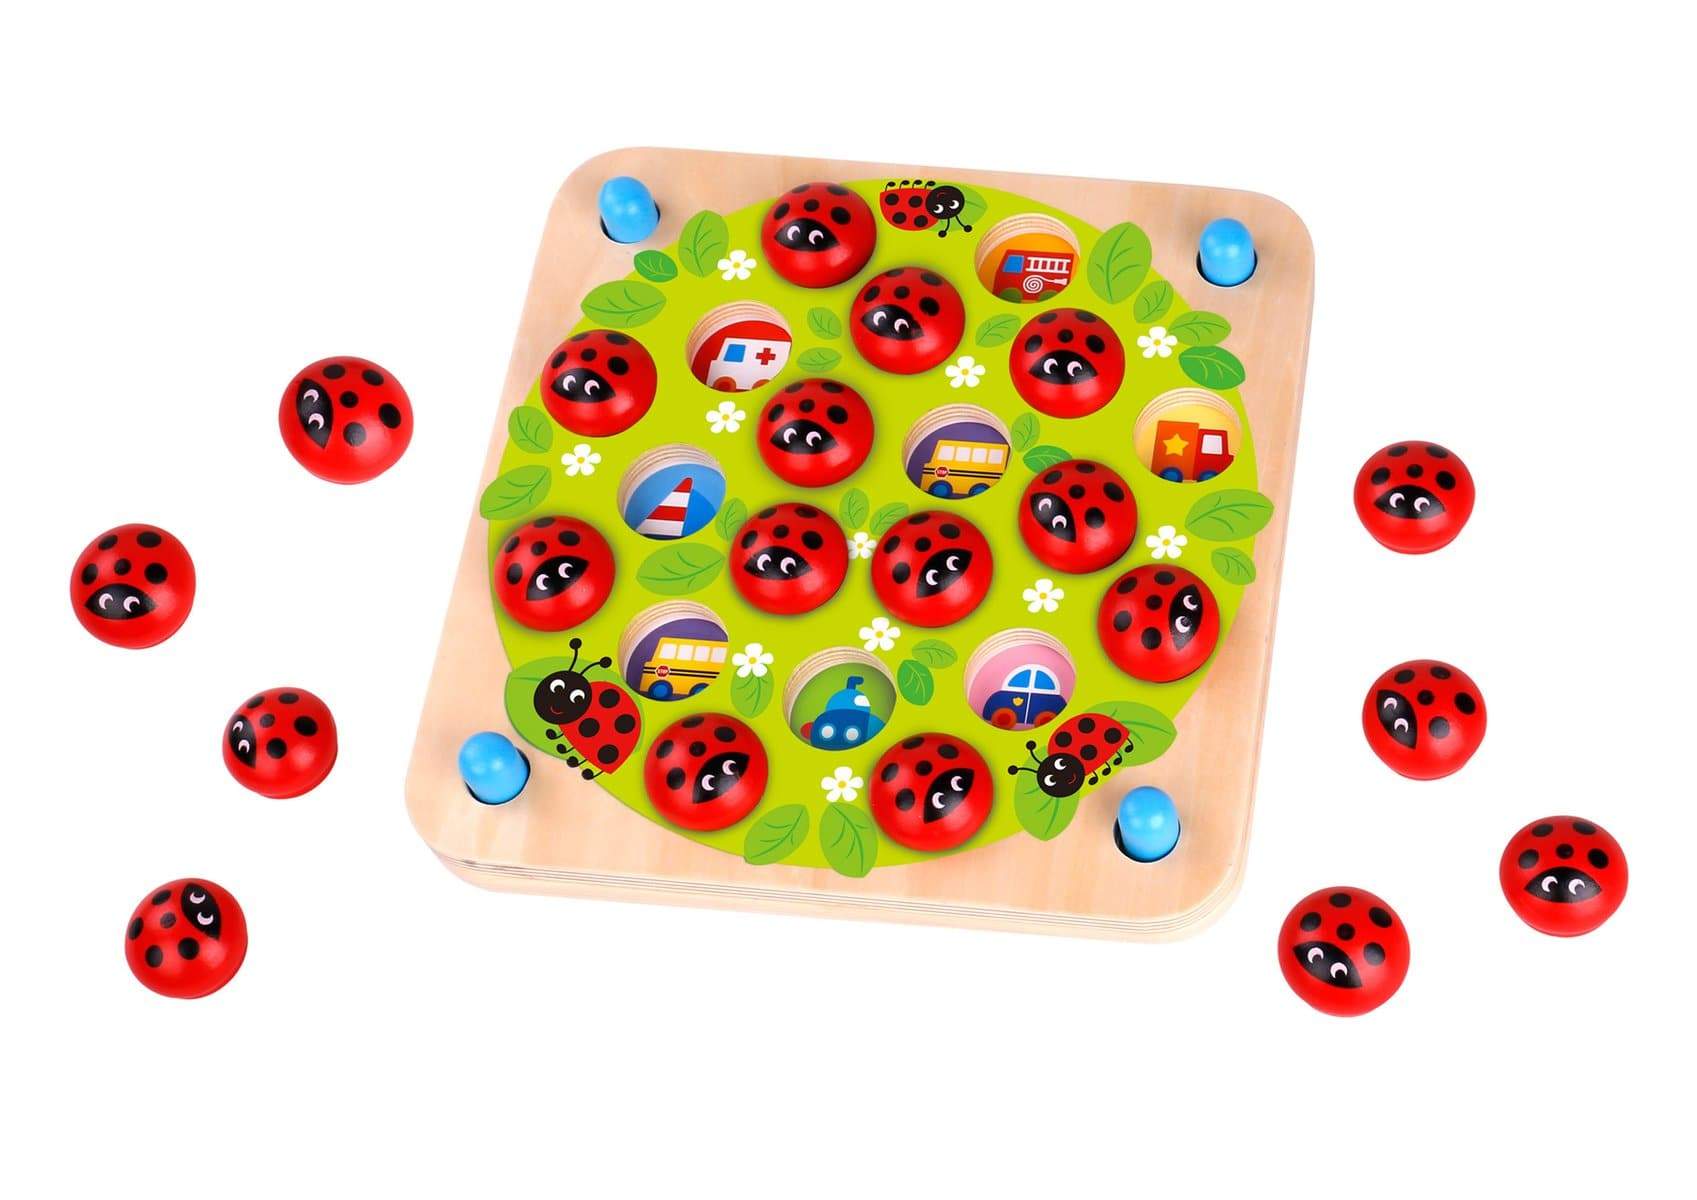 toys for infant Memory Game - Ladybug